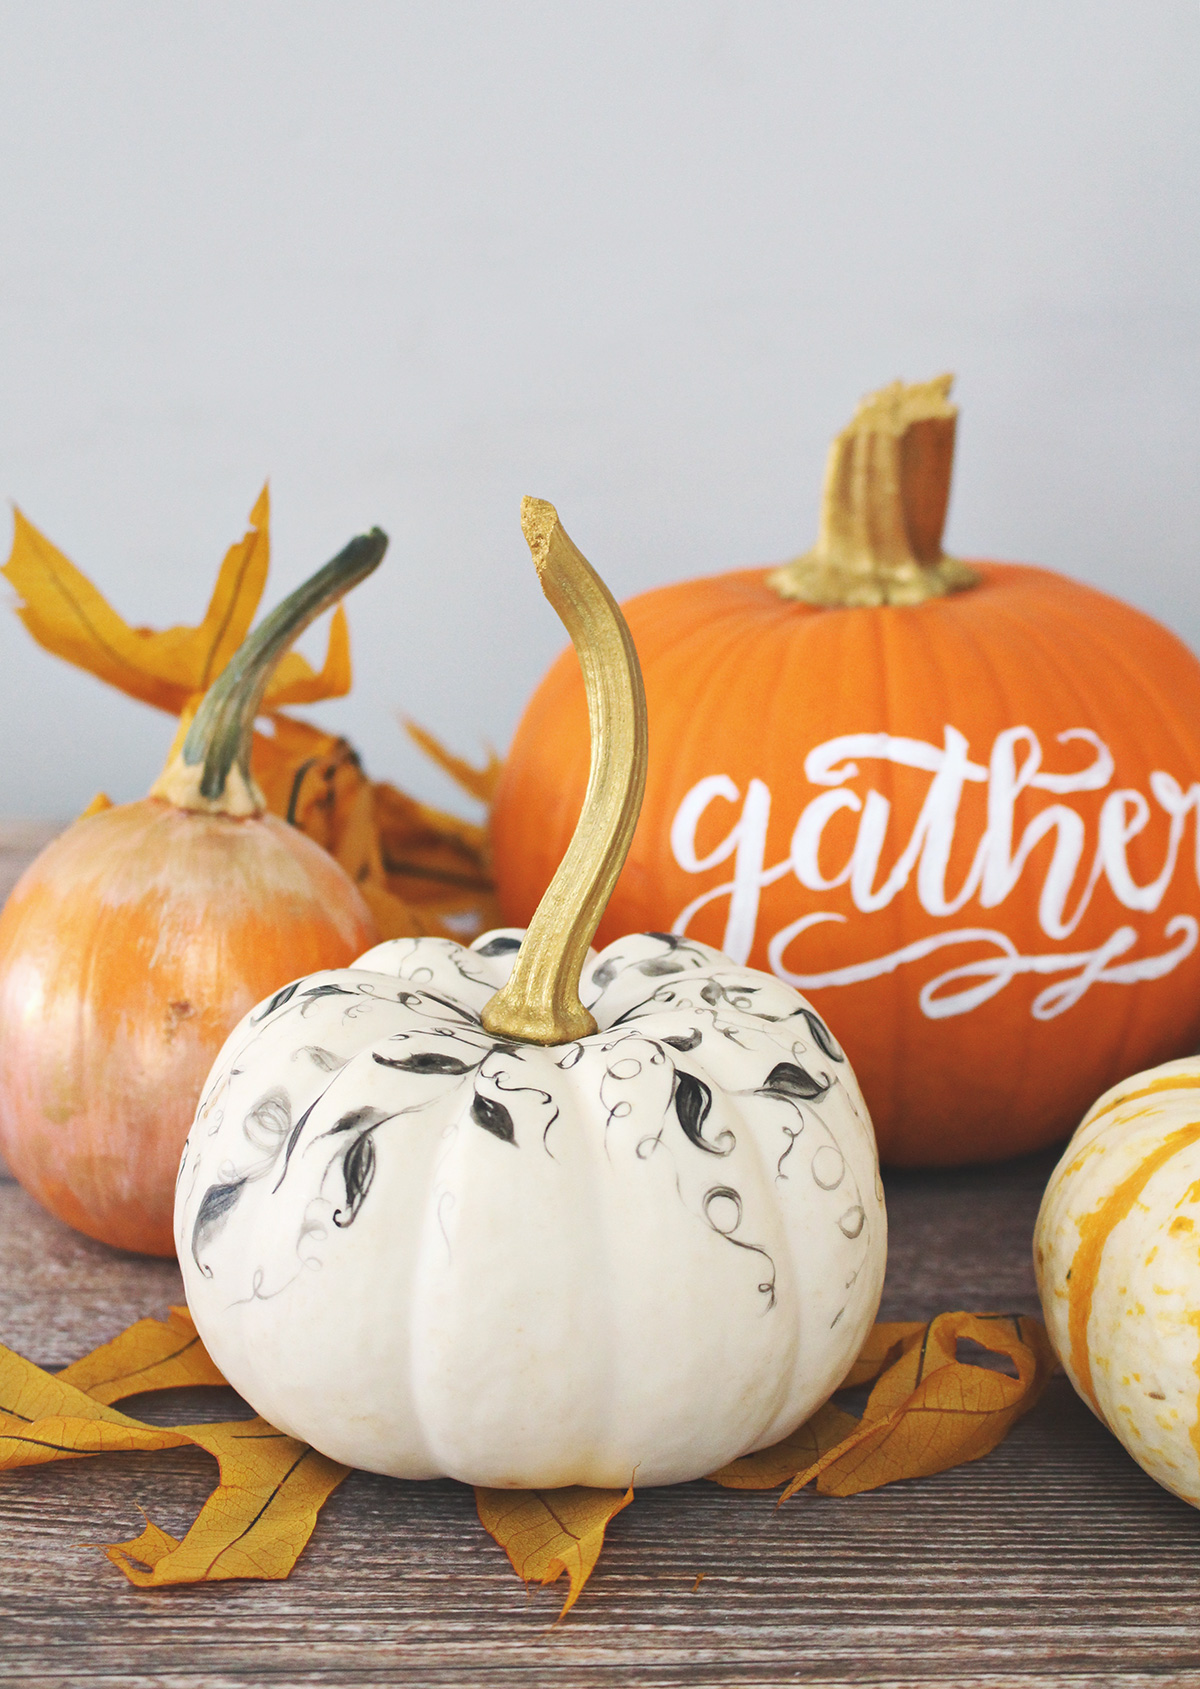 5 Creative Ideas for Painting Elegant Pumpkins | No carve pumpkin ideas | pumpkin decorating